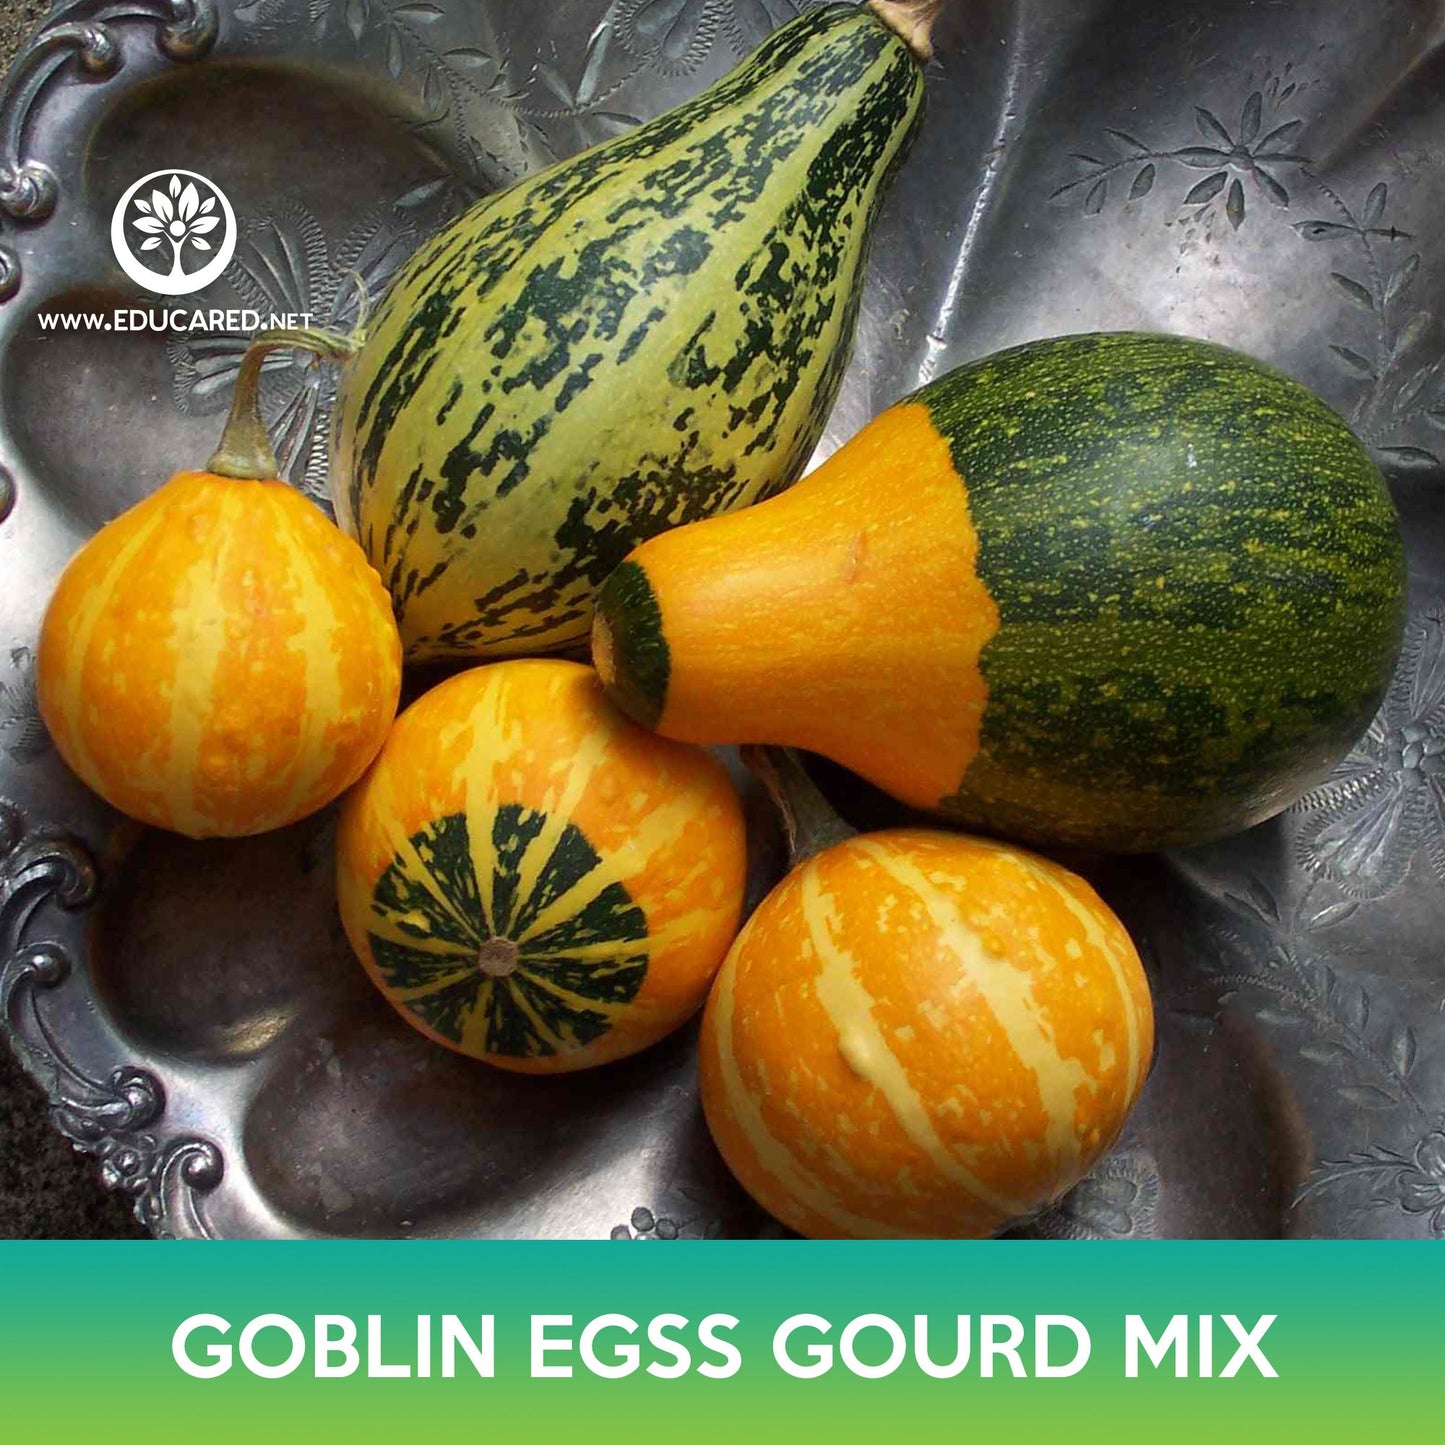 Goblin Eggs Gourd Mix Seeds